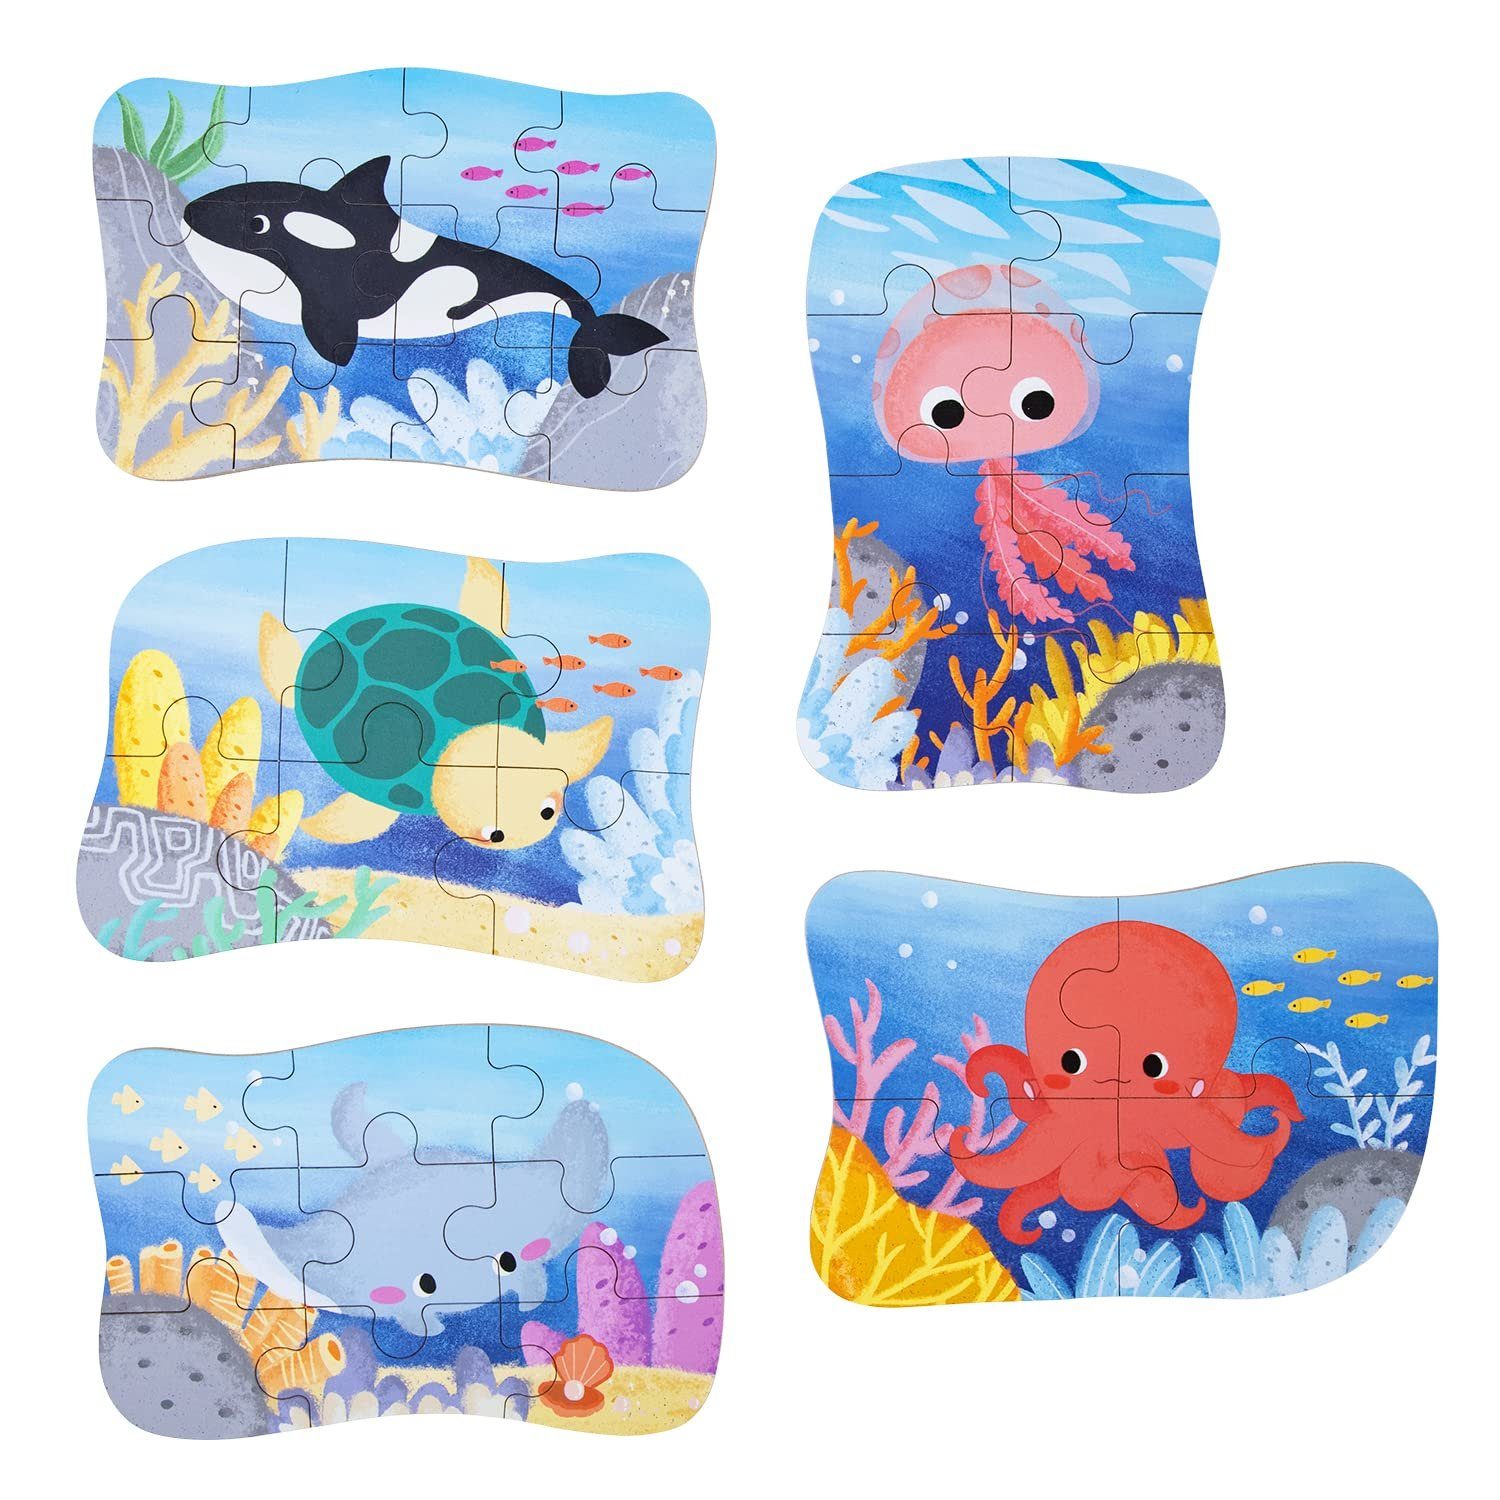 Juoungle Rahmenpuzzle Kinderpuzzle, 5 Bilds Puzzles, Geeignet für Jungen und Mädchen Puzzle, Puzzleteile Bunt(Meerestier)